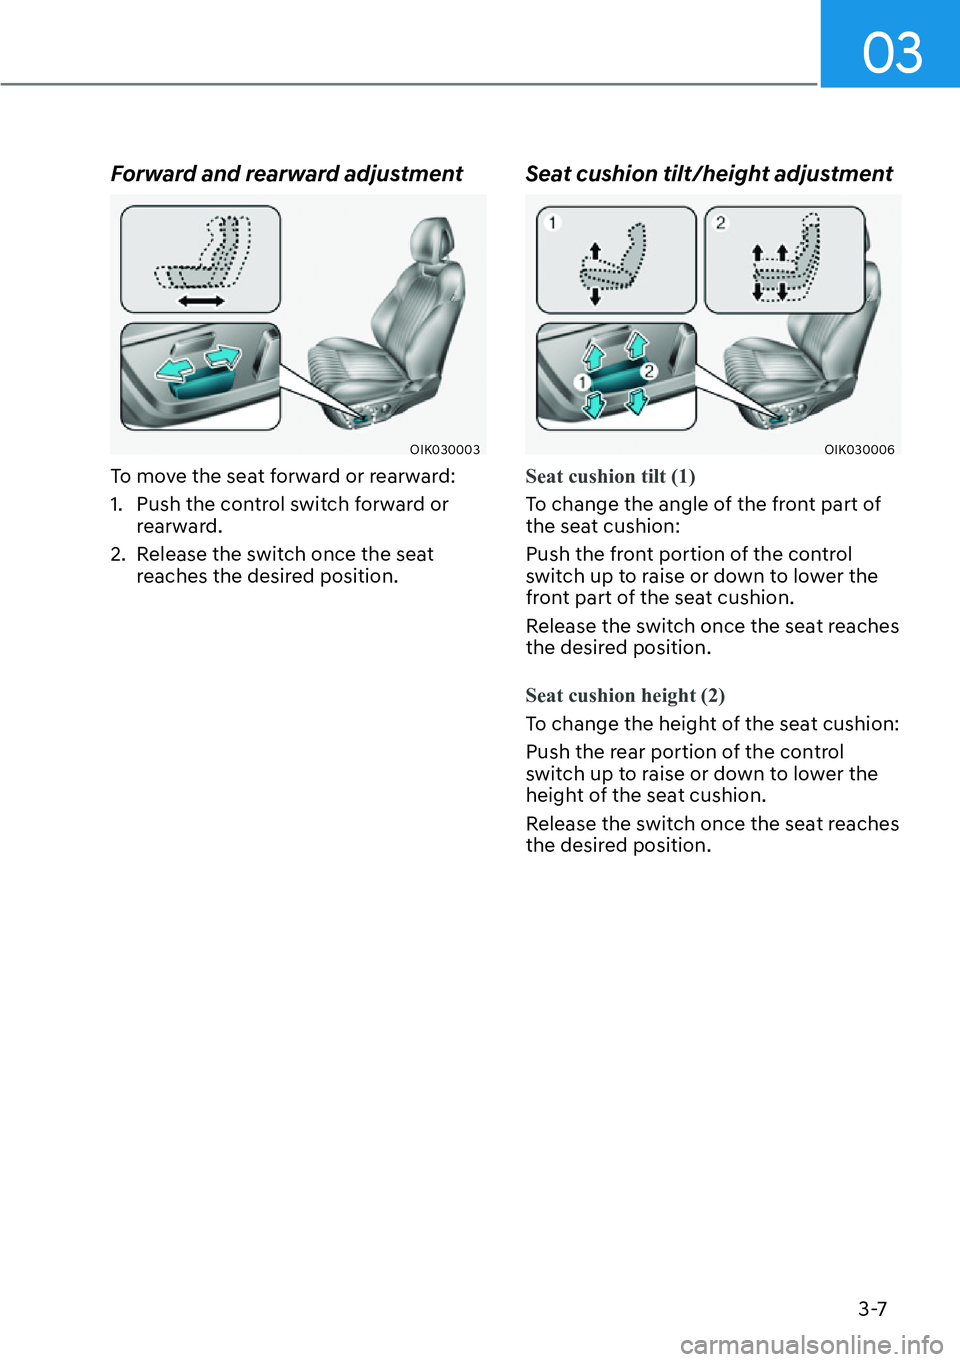 HYUNDAI GENESIS G70 2022  Owners Manual 03
3-7
Forward and rearward adjustment
OIK030003
To move the seat forward or rearward:
1.  Push the control switch forward or 
rearward.
2.  Release the switch once the seat 
reaches the desired posit